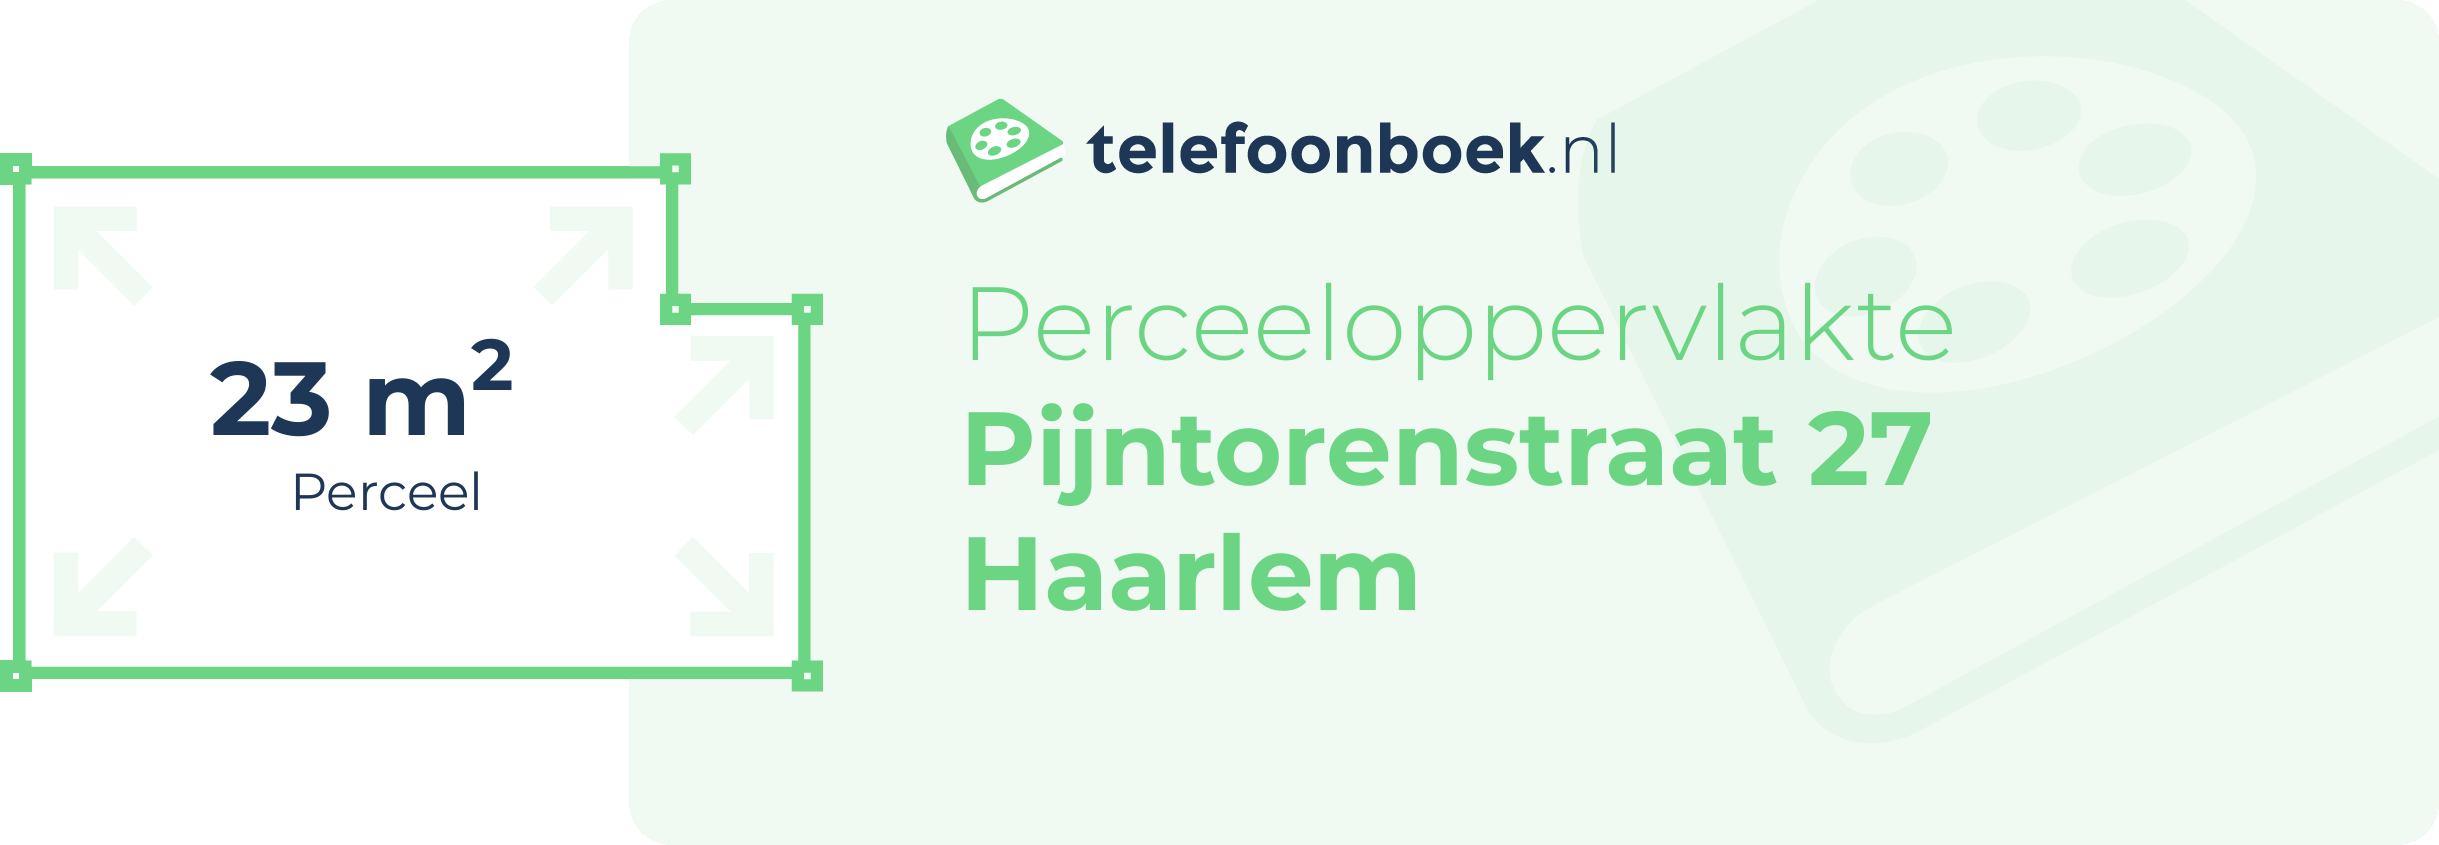 Perceeloppervlakte Pijntorenstraat 27 Haarlem